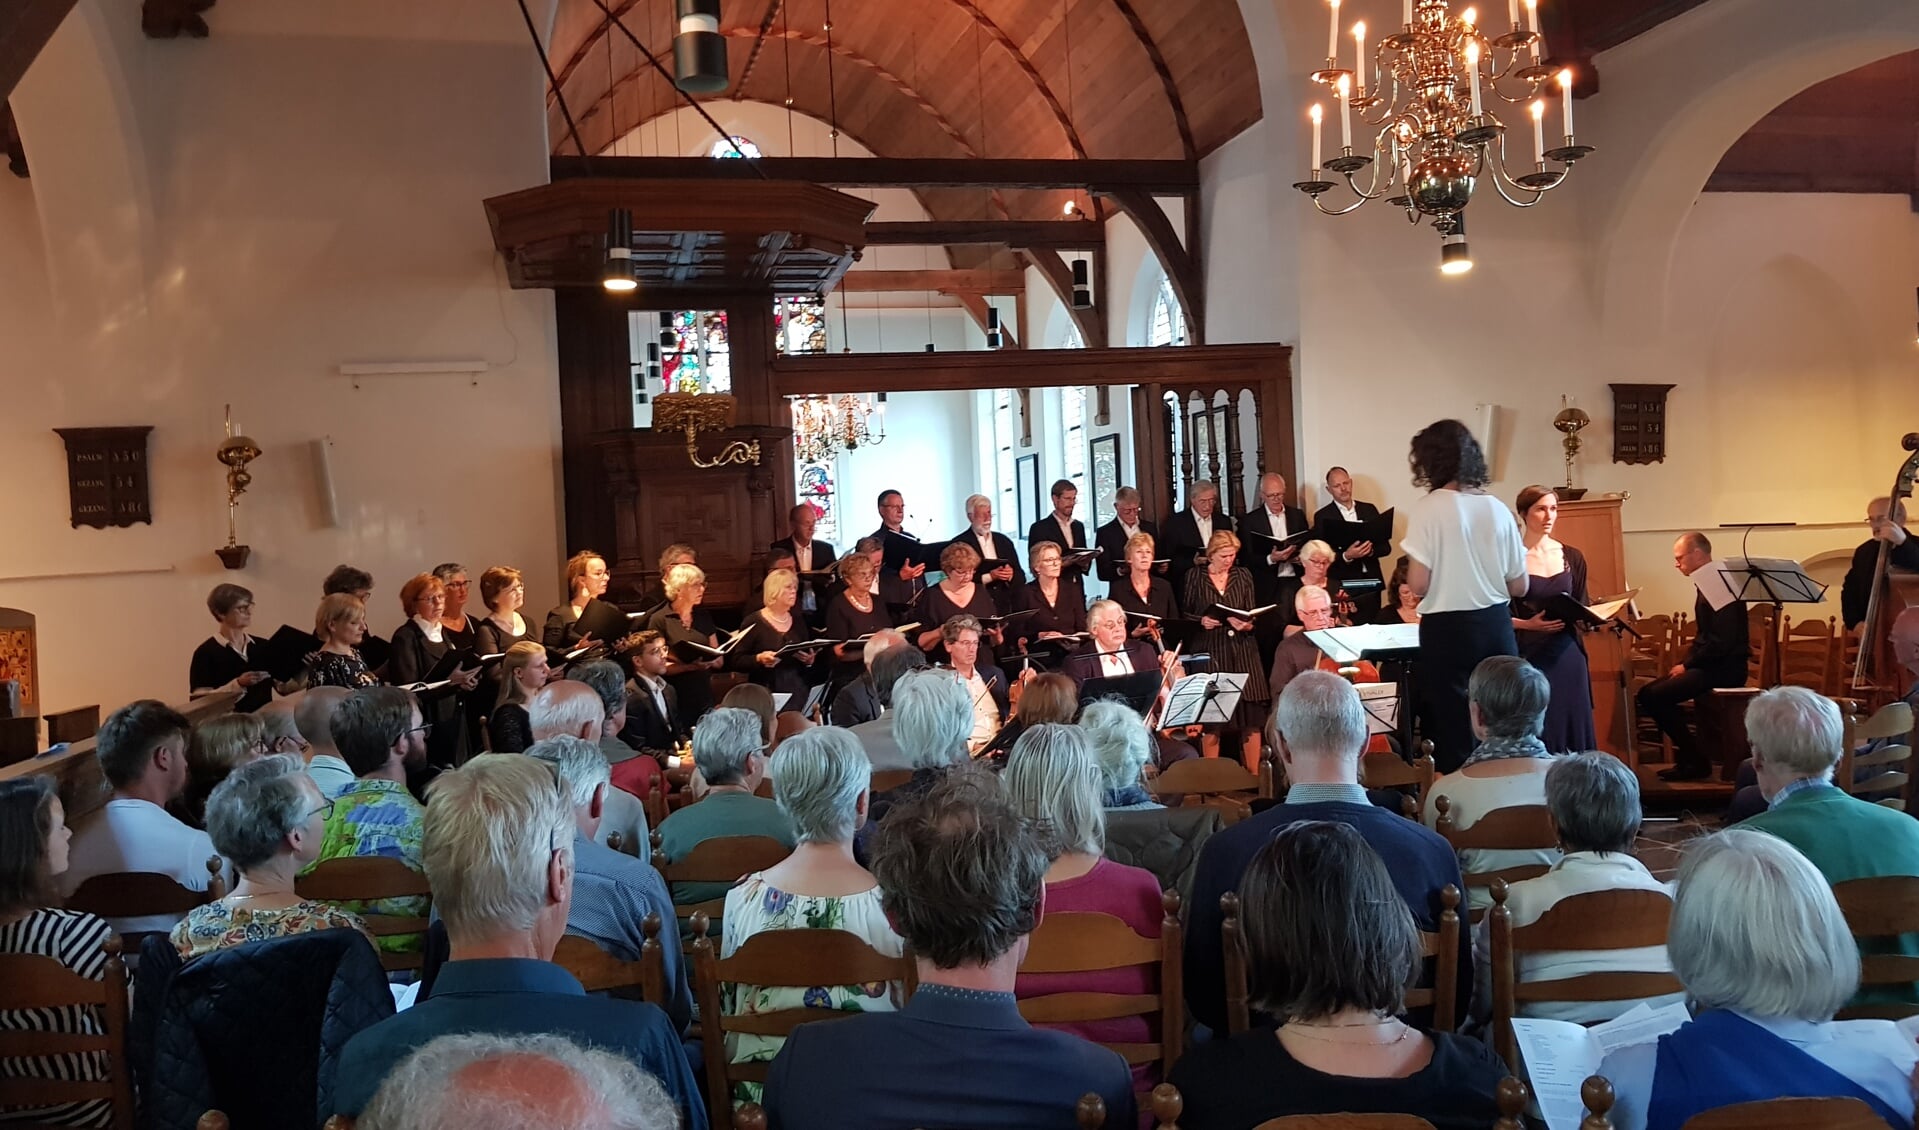 Concert Vreeland Vocaal 2022 Grote Kerk Vreeland